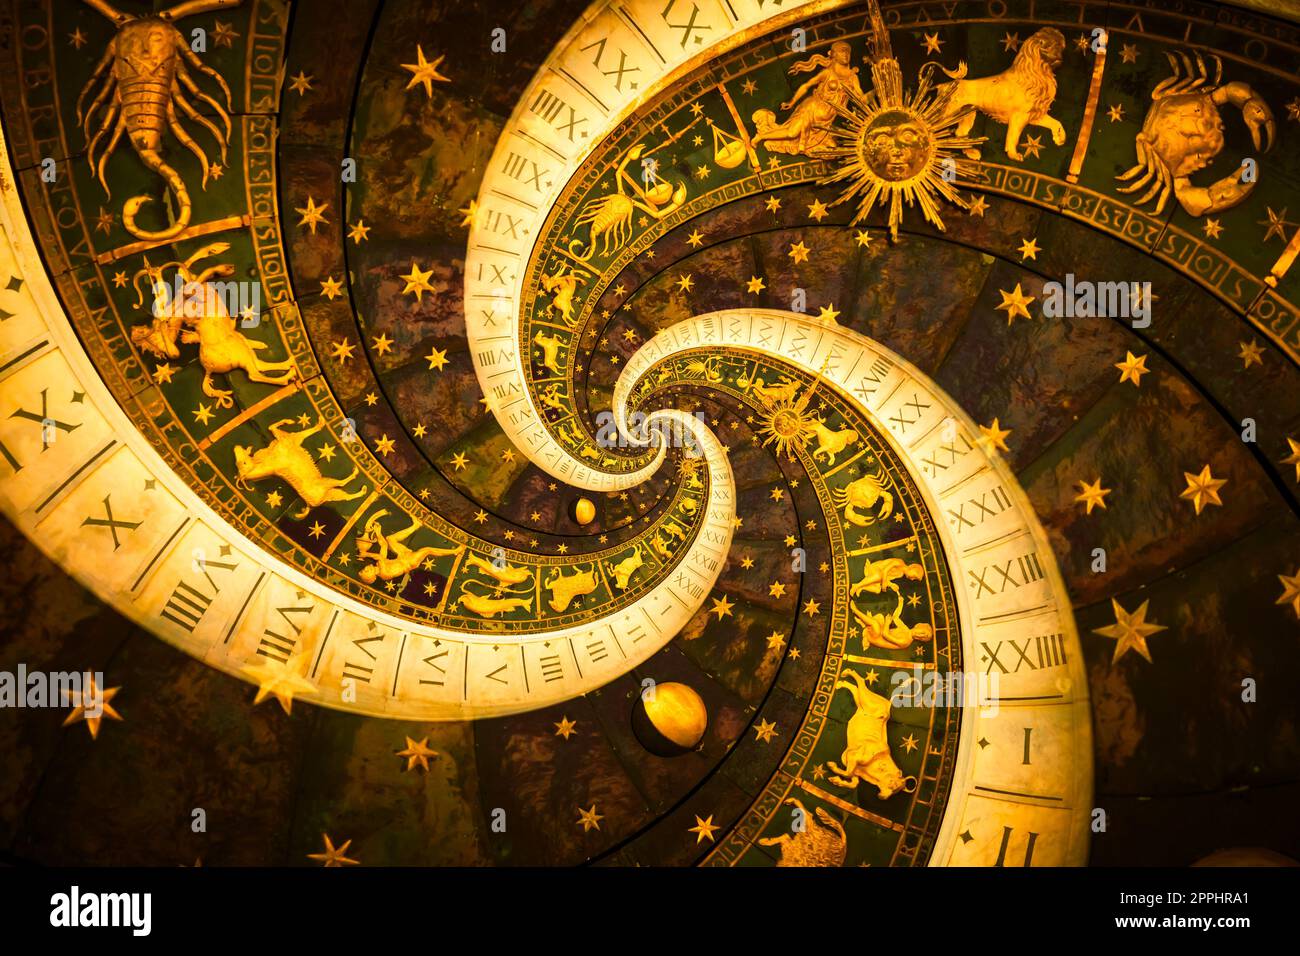 Astrology and alchemy sign background illustration Stock Photo - Alamy